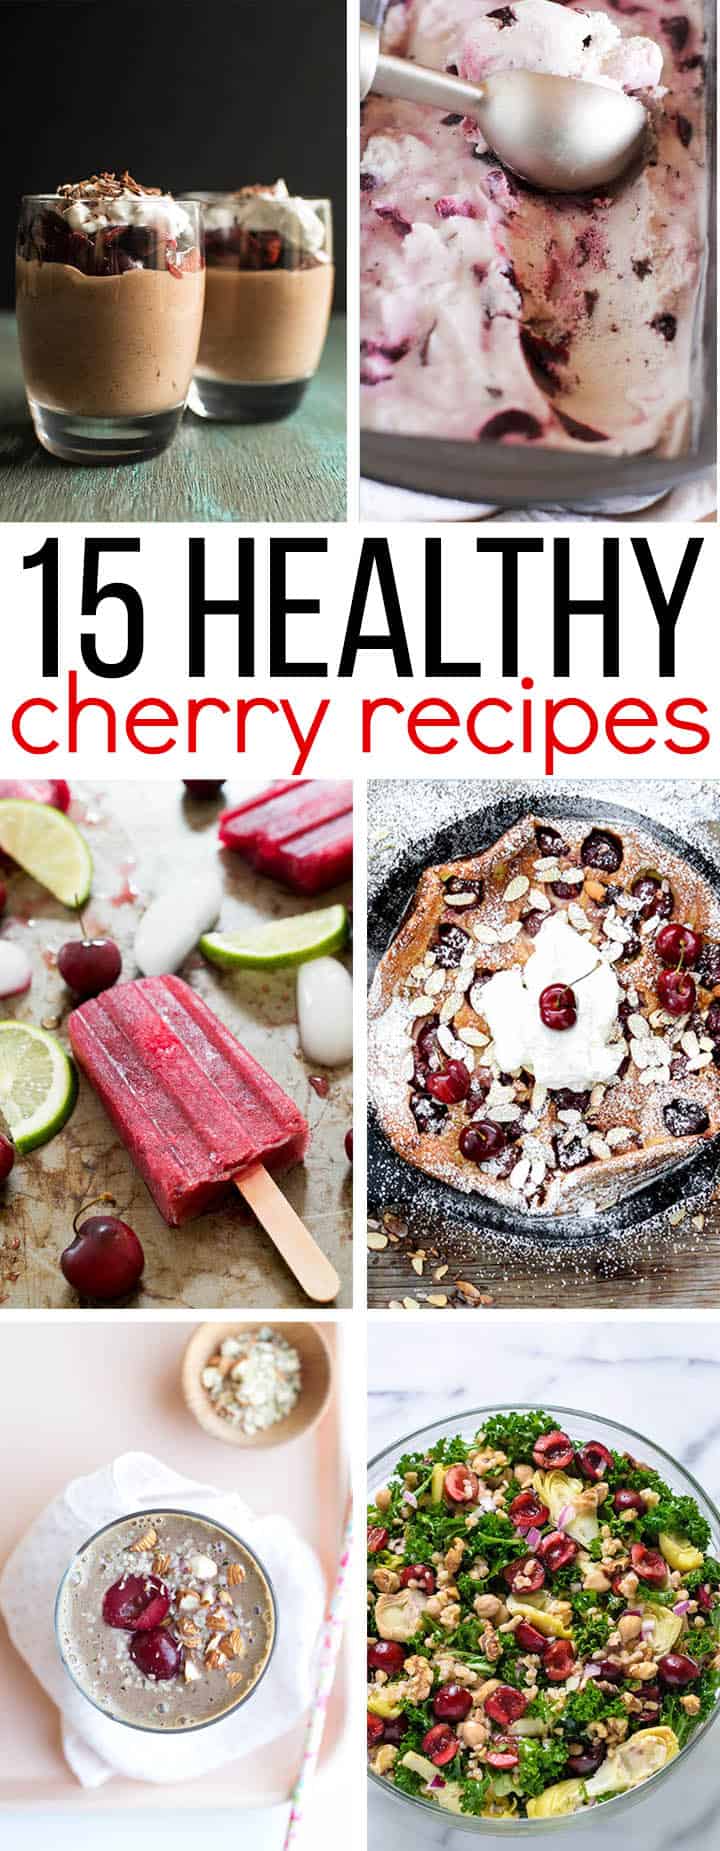 15 Healthy Cherry Recipes for Summer | clube.futebolmilionario.com